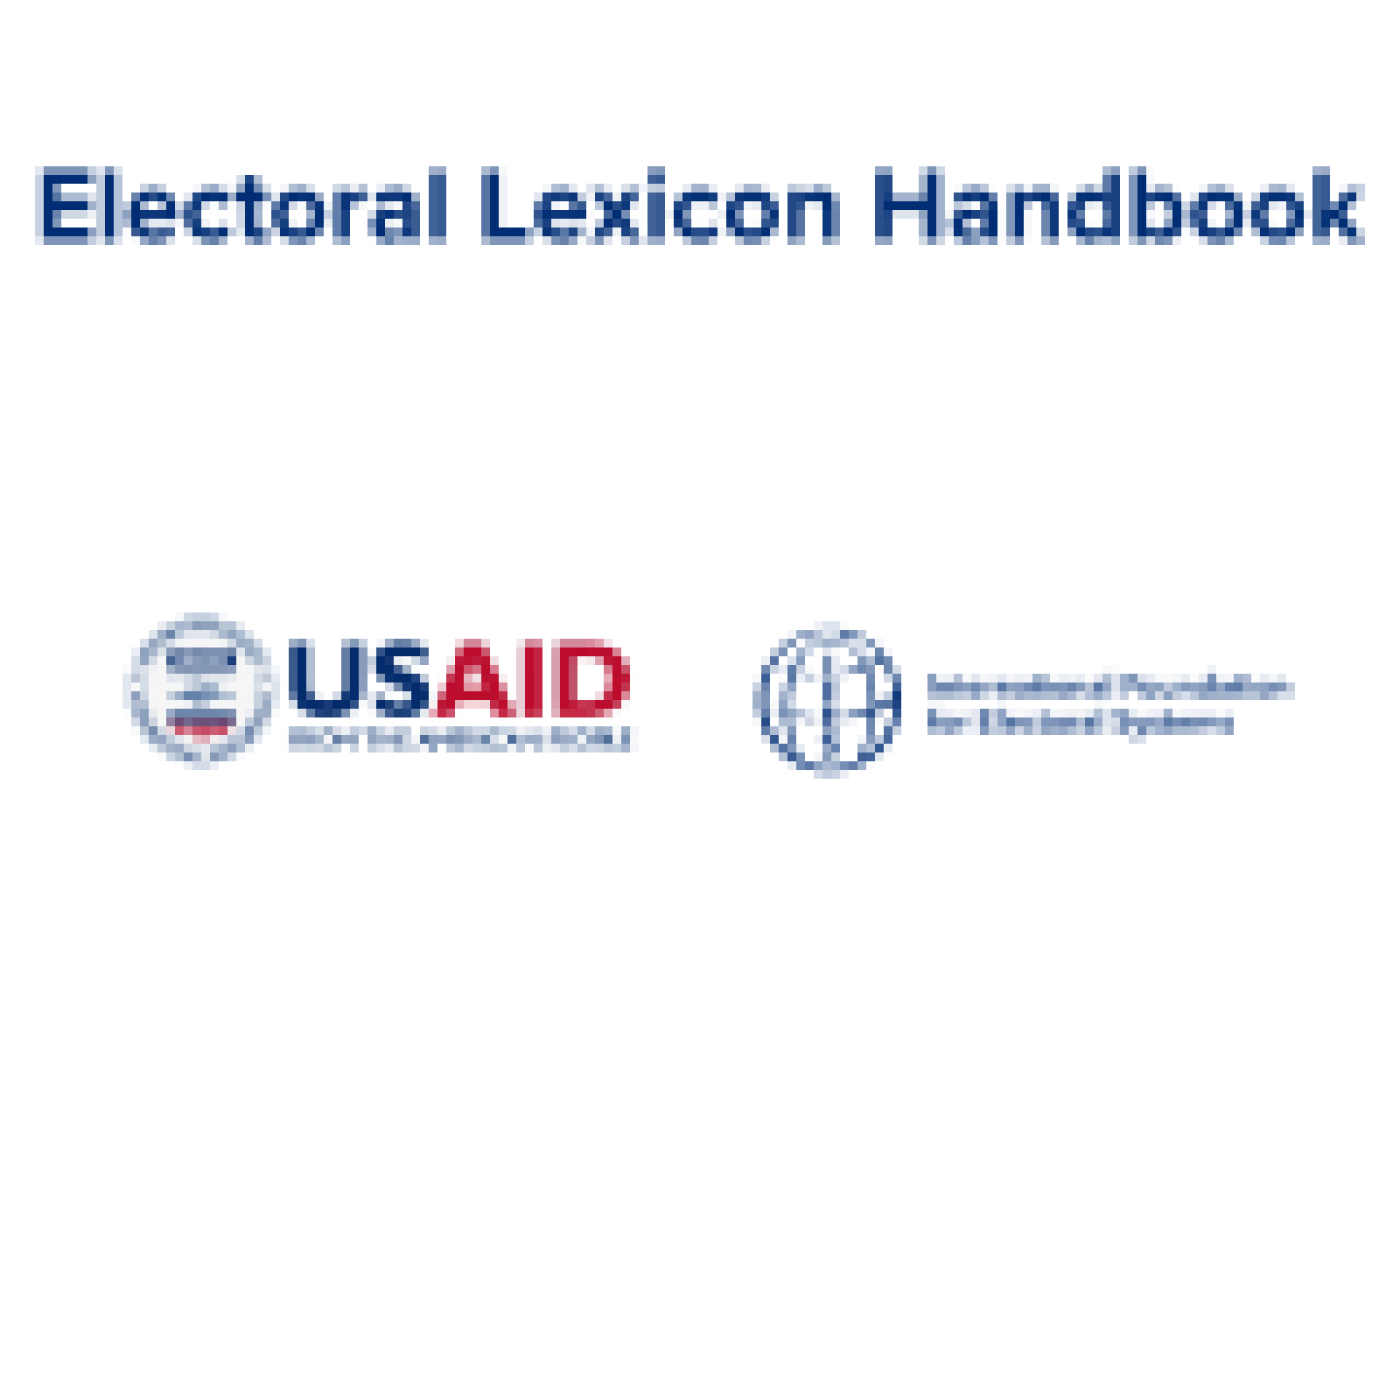 Electoral lexicon handbook USAID and IFES logos